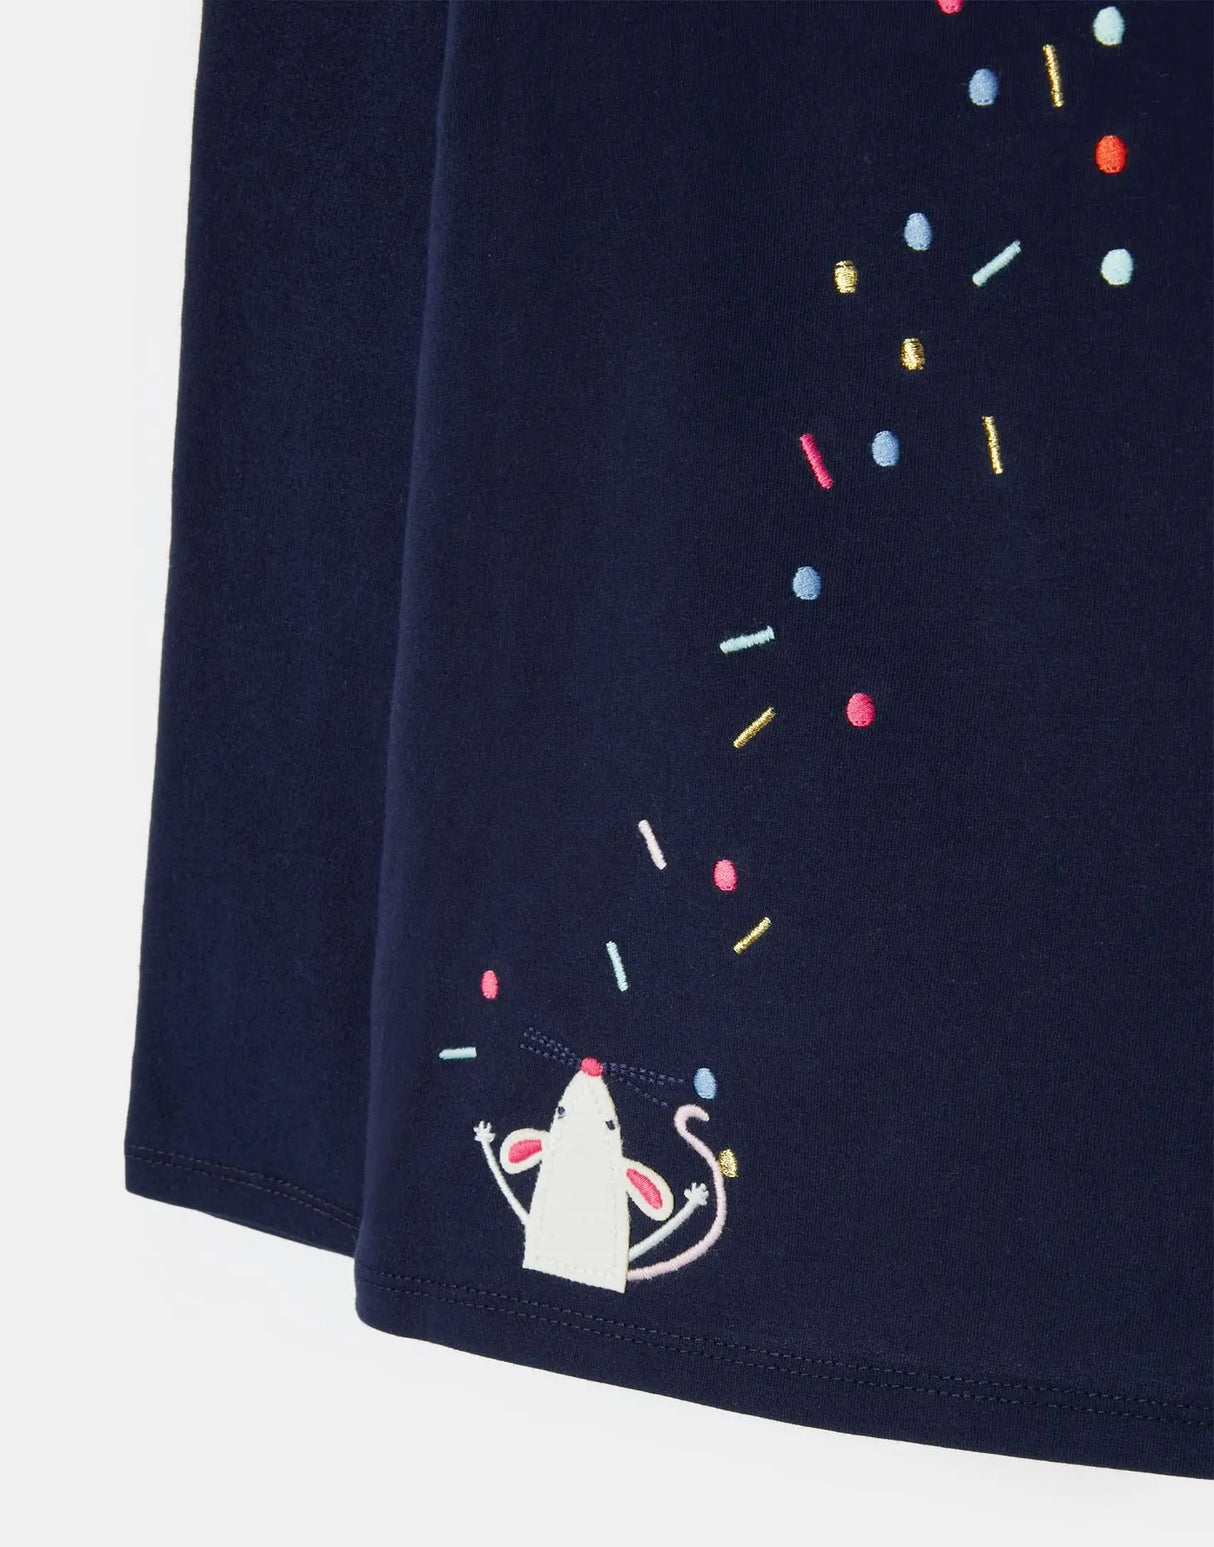 Ava Long Sleeve Applique Artwork T-Shirt | Joules - Joules